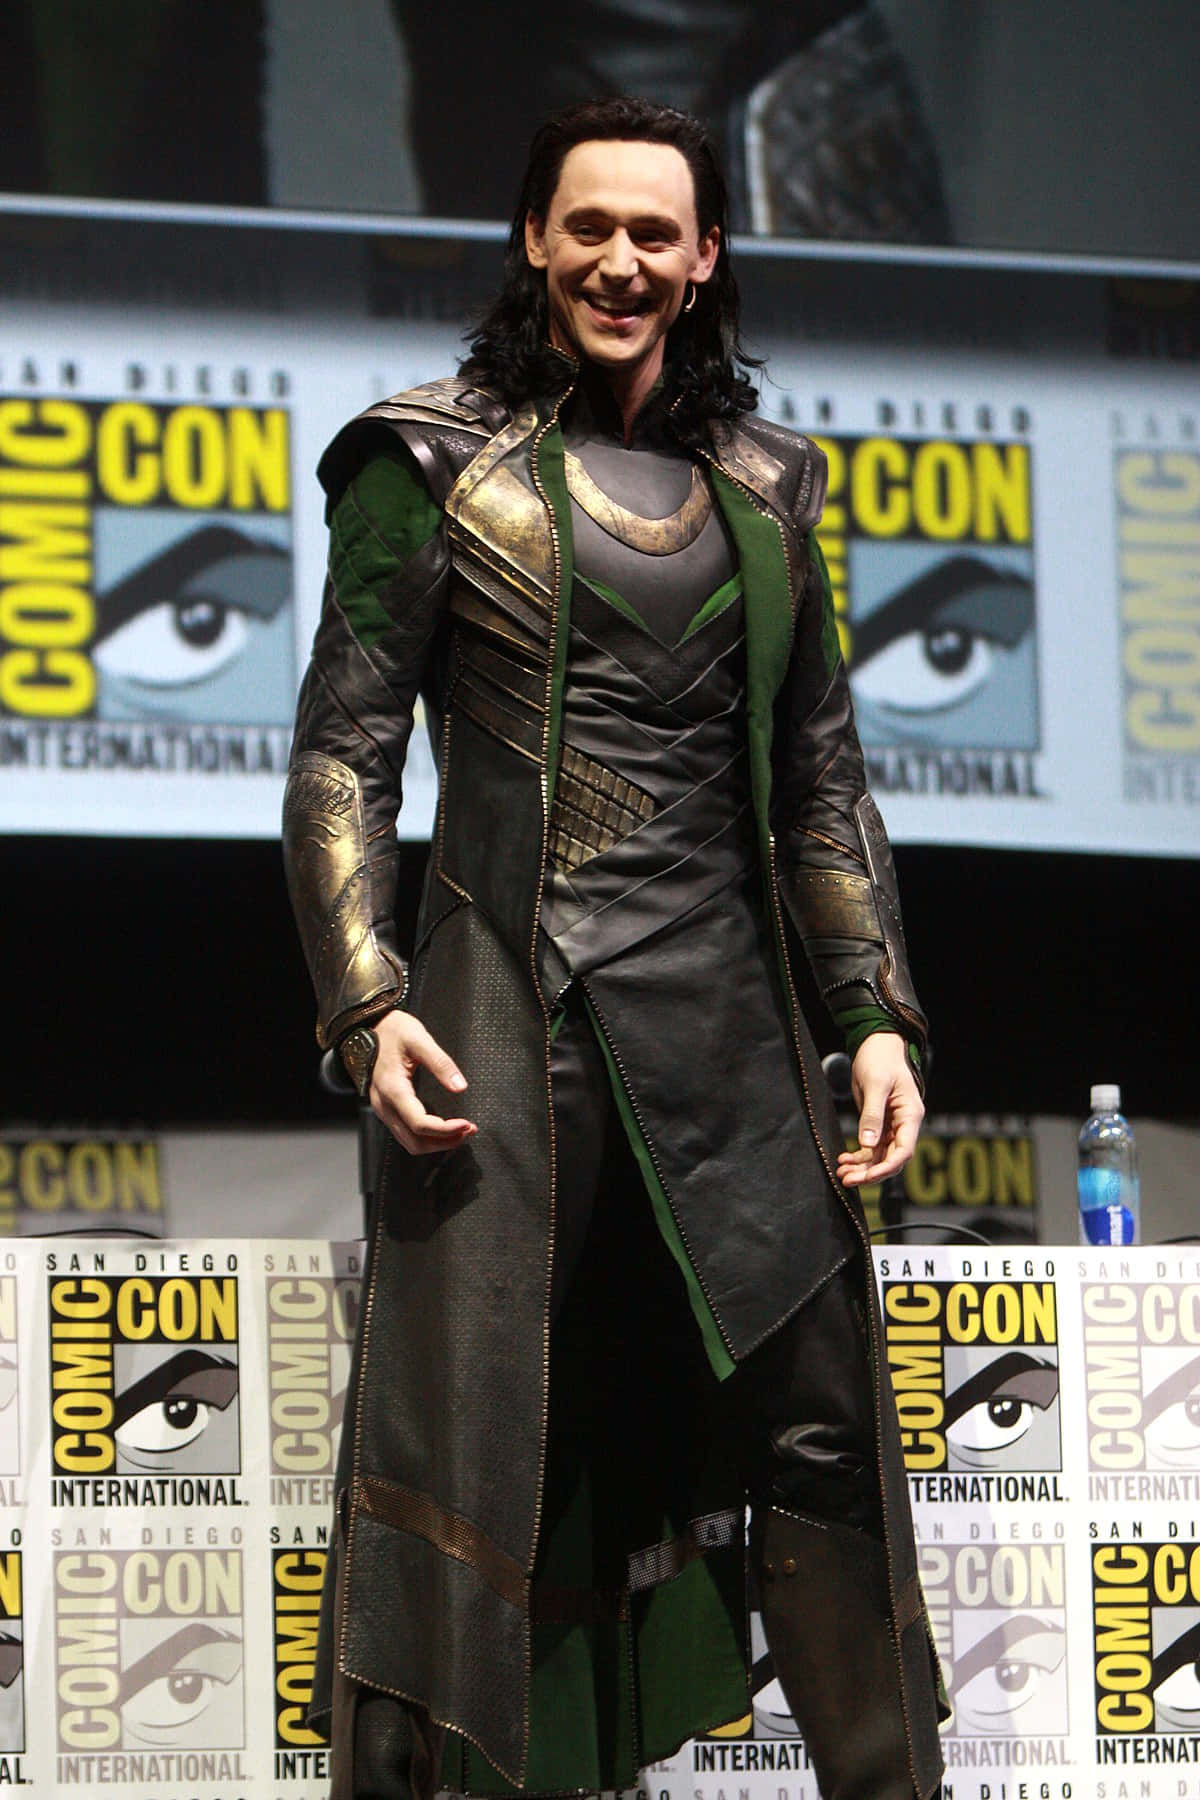 Denlistiga Busmakaren, Loki.